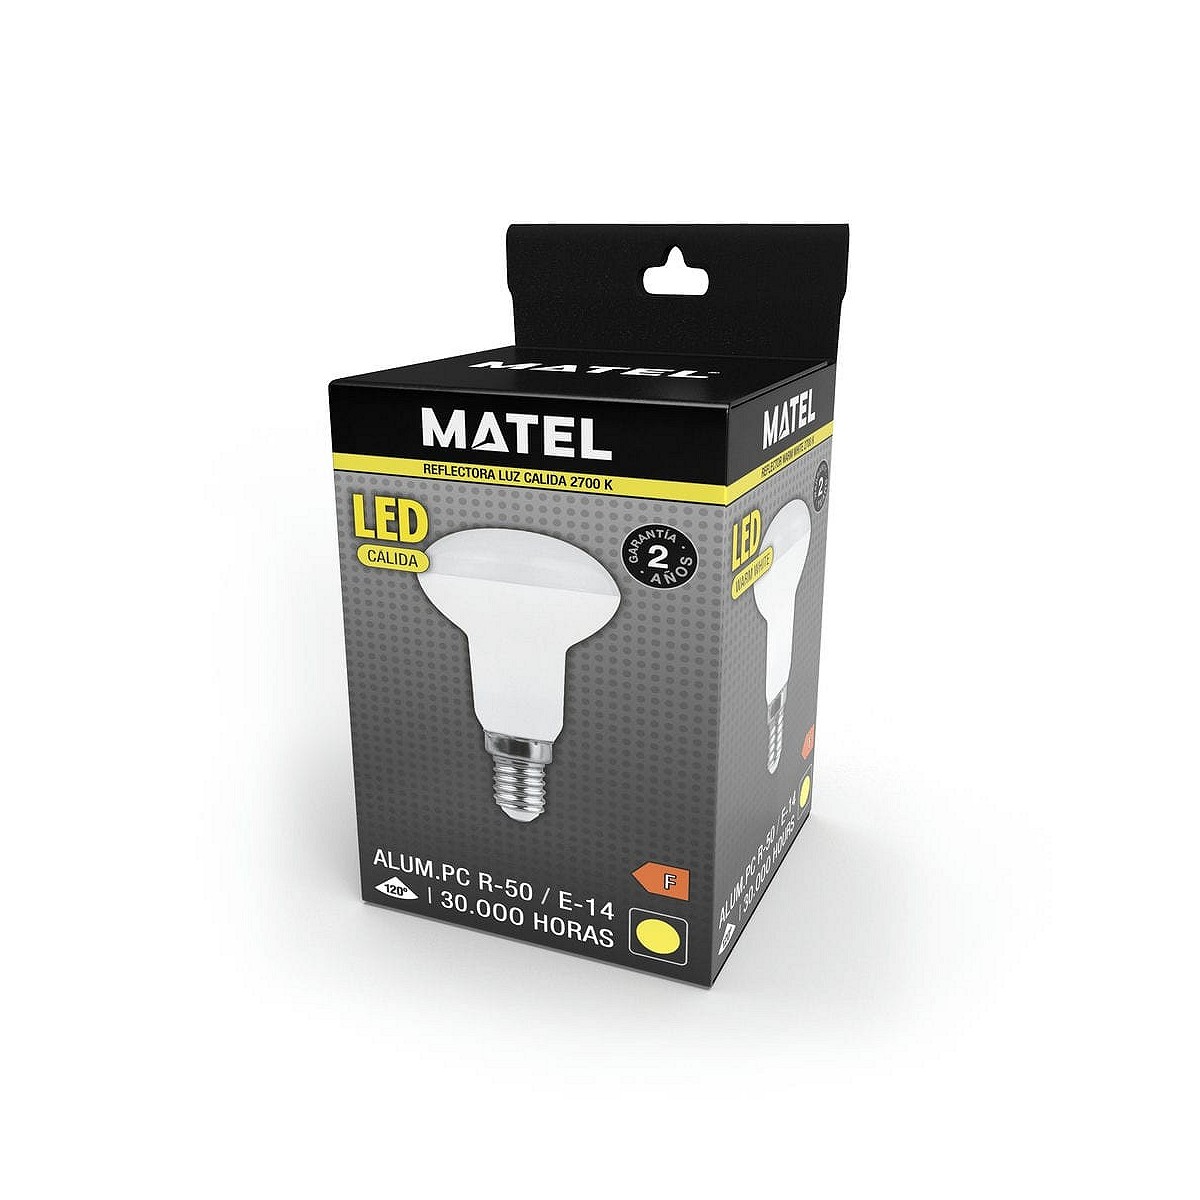 Compra BOMBILLA LED REFLECTORA MATEL E14 R50 6W CÁLIDA al mejor precio